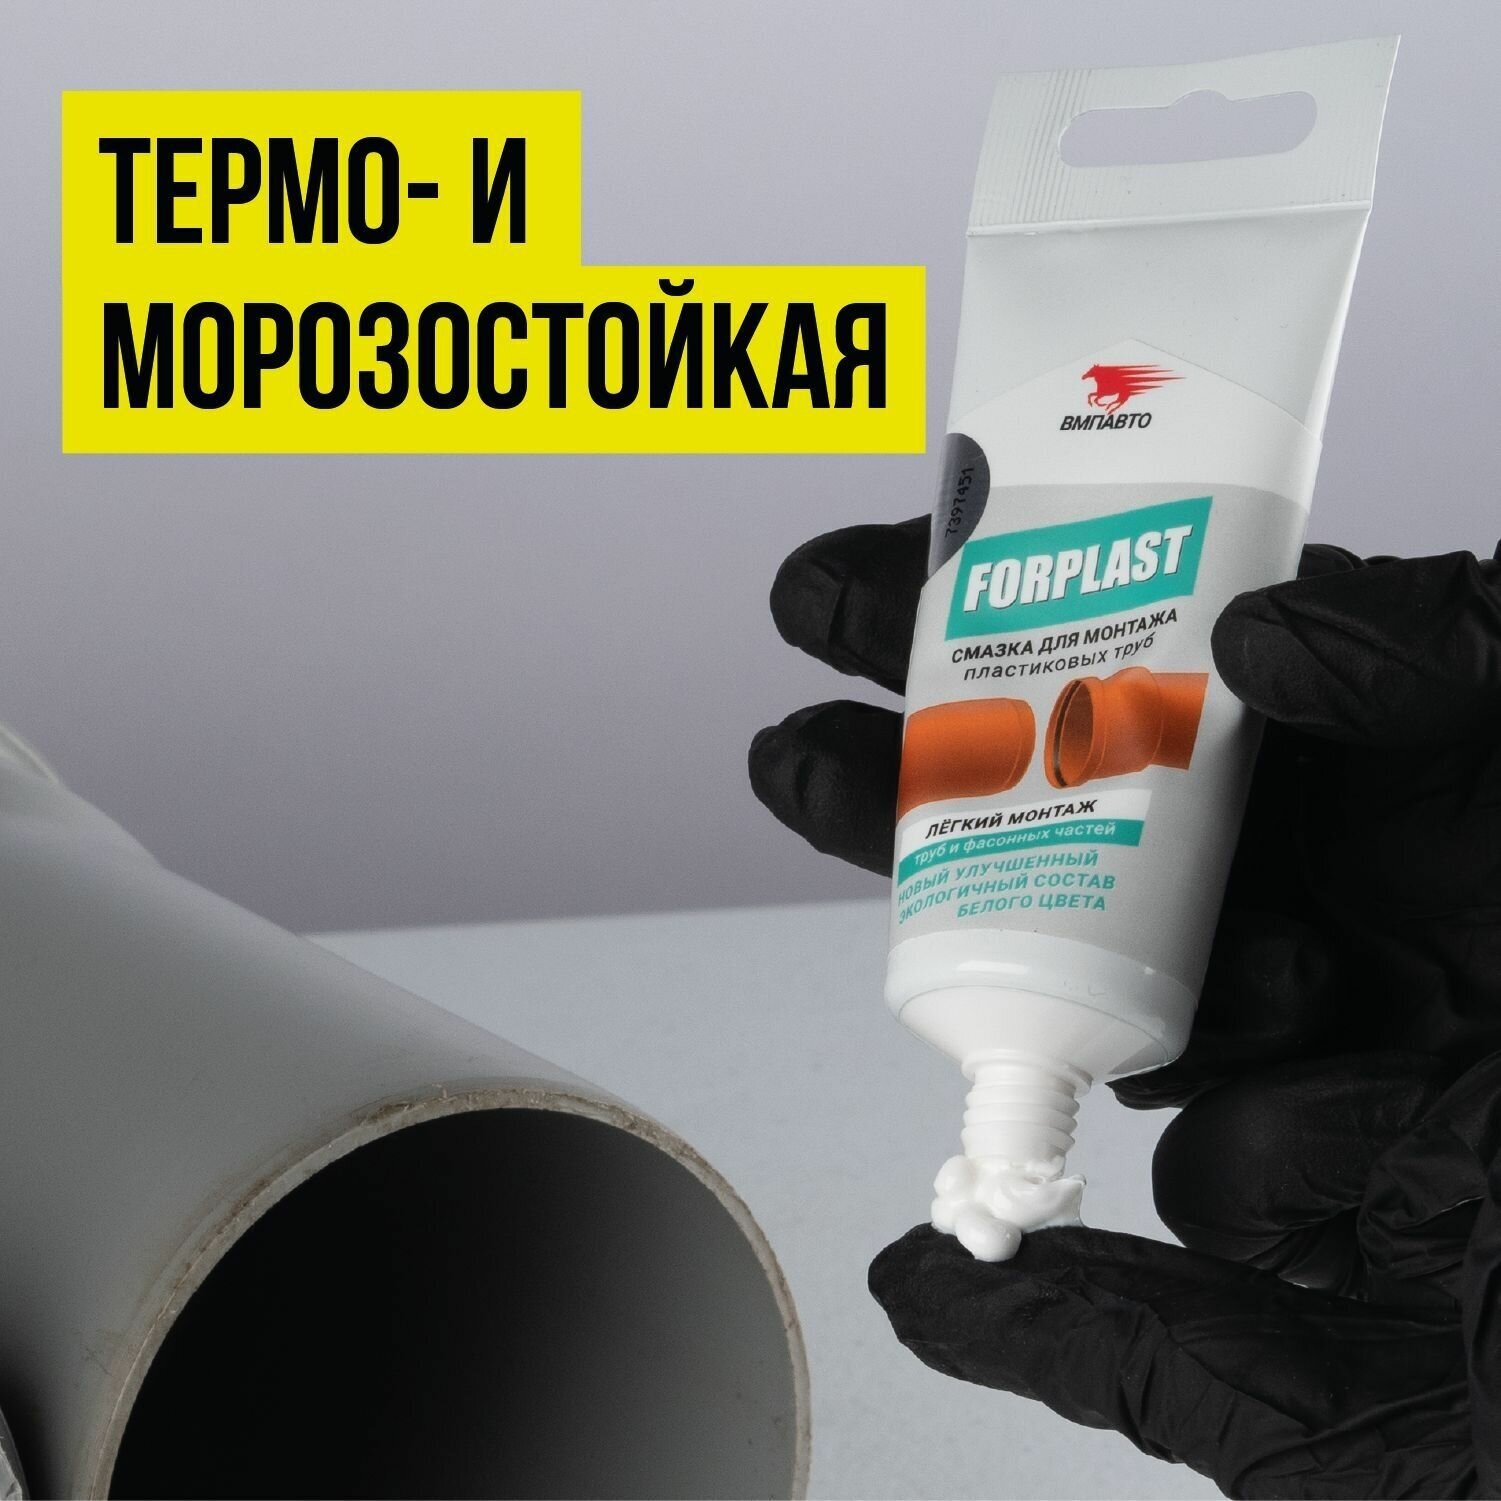 Смазка для монтажа пластиковых труб FORPLAST ВМПАВТО 50 мл туба